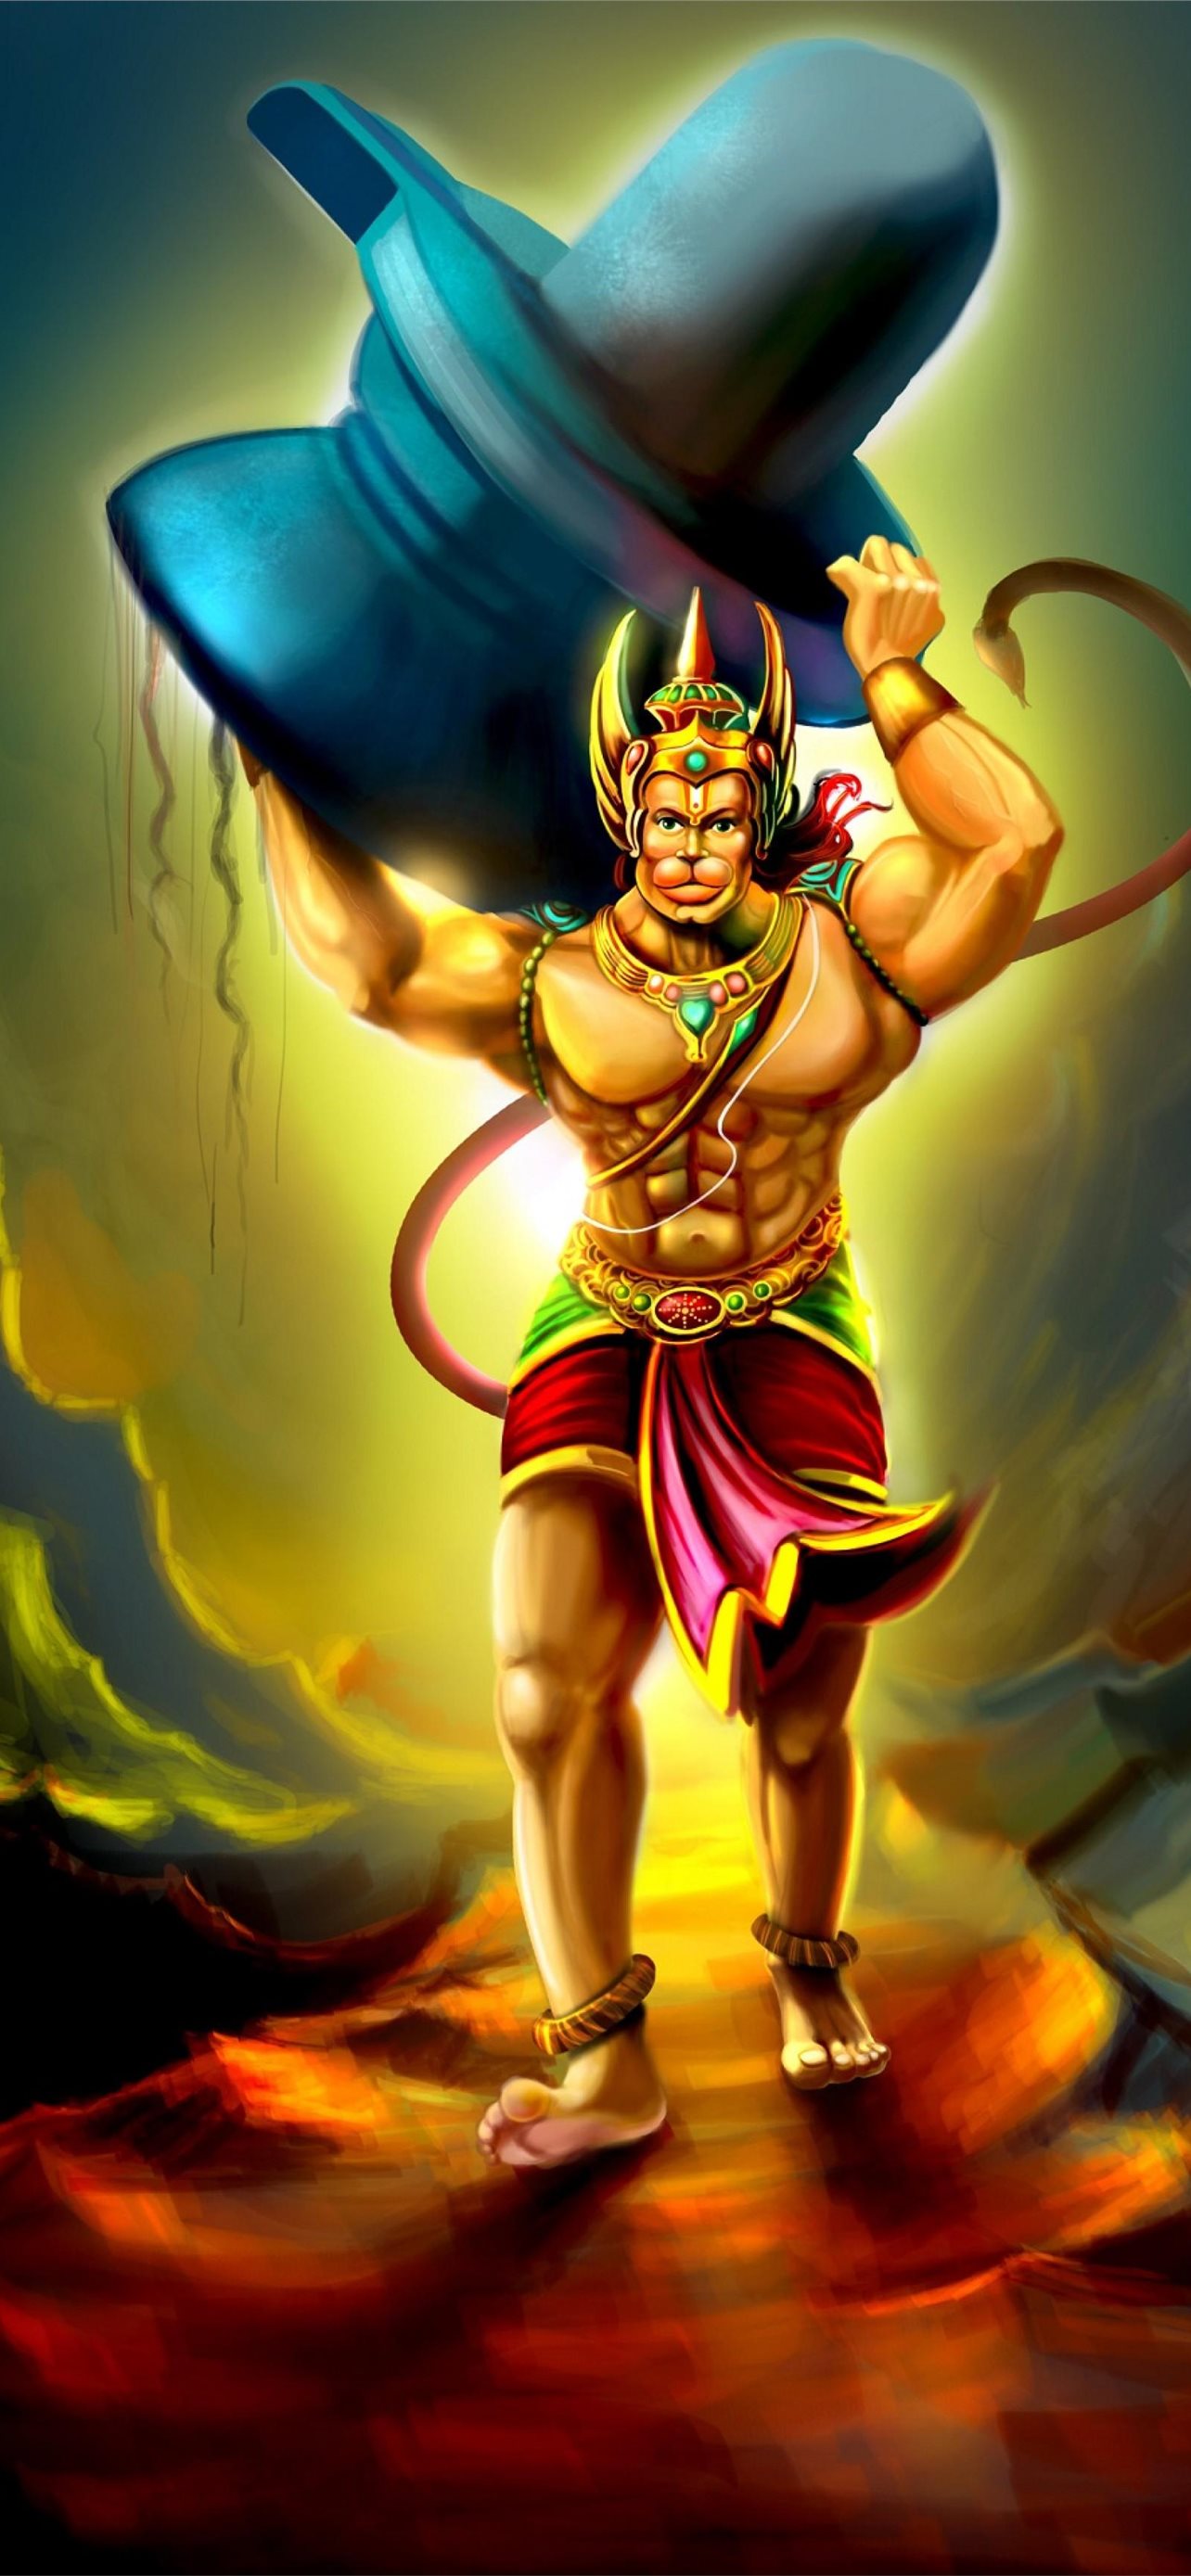 Angry High Resolution Lord Hanuman Images